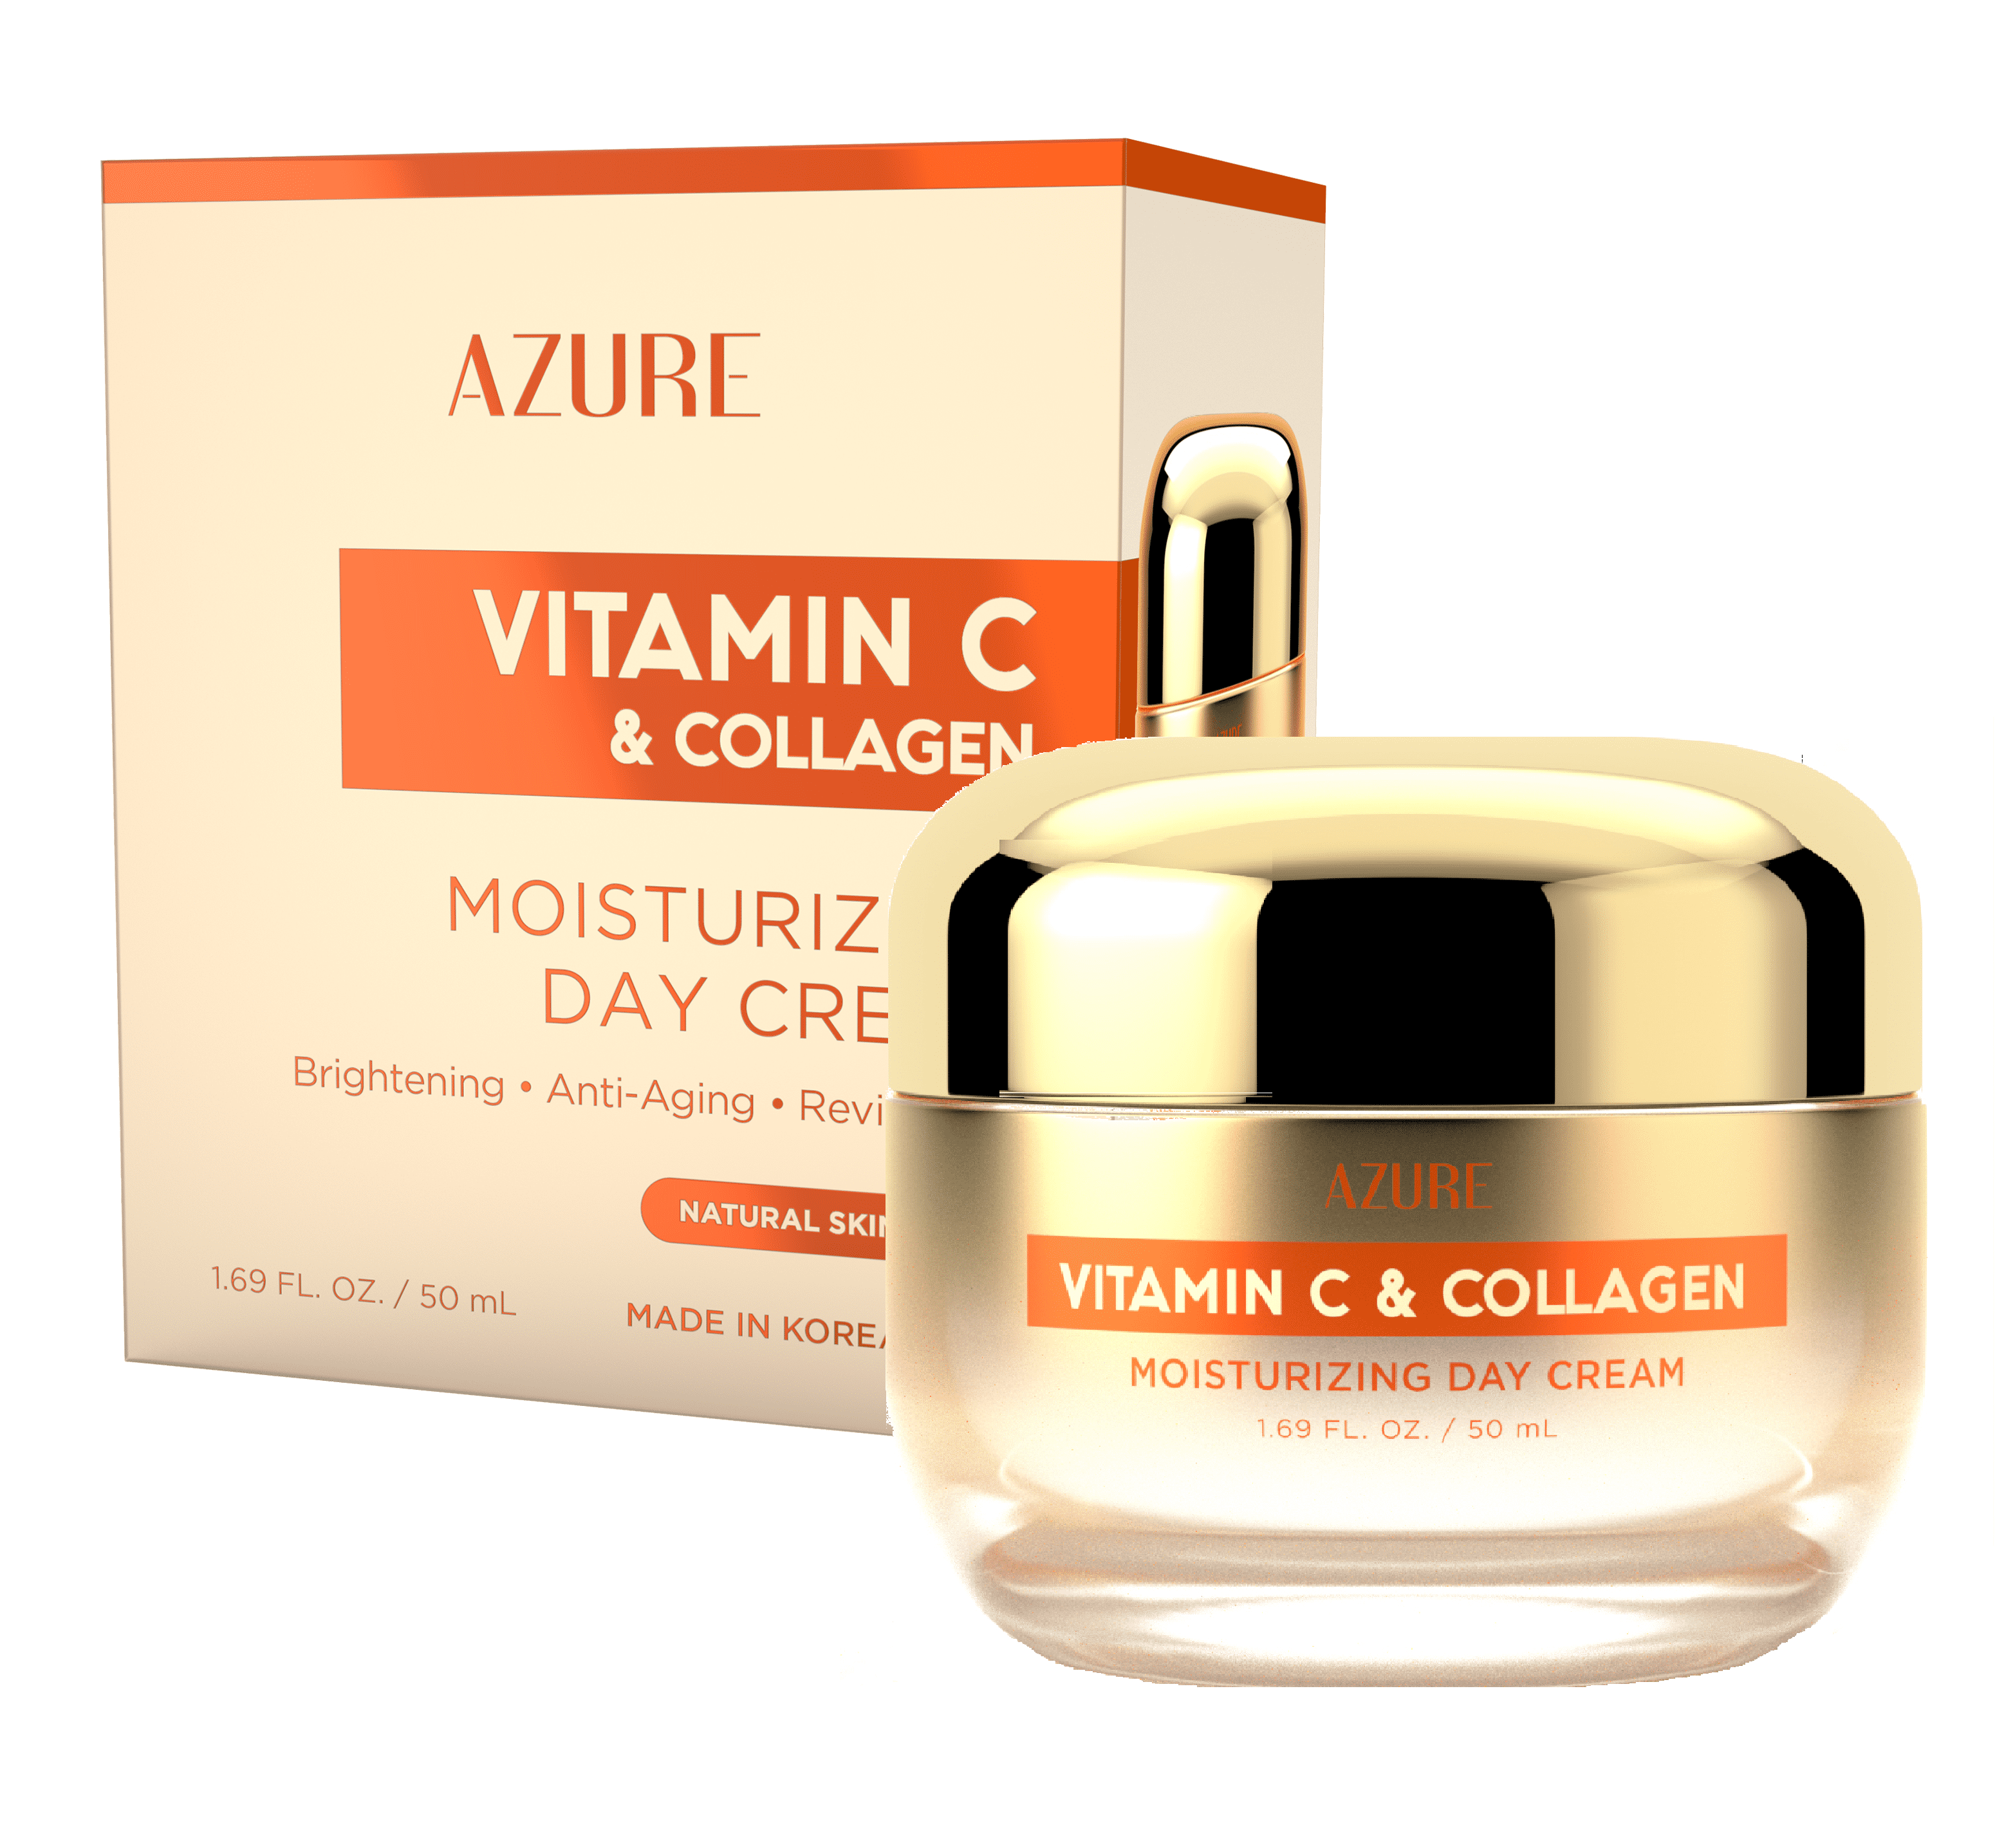 AZURE Vitamin C & Collagen Moisturizing Day Cream - Aging, Revitalizing & Brightening Moisturizer - Reduces Fine Lines & Wrinkles, Diminishes Signs of Aging - Skin Care Made in Korea - 50mL - Walmart.com